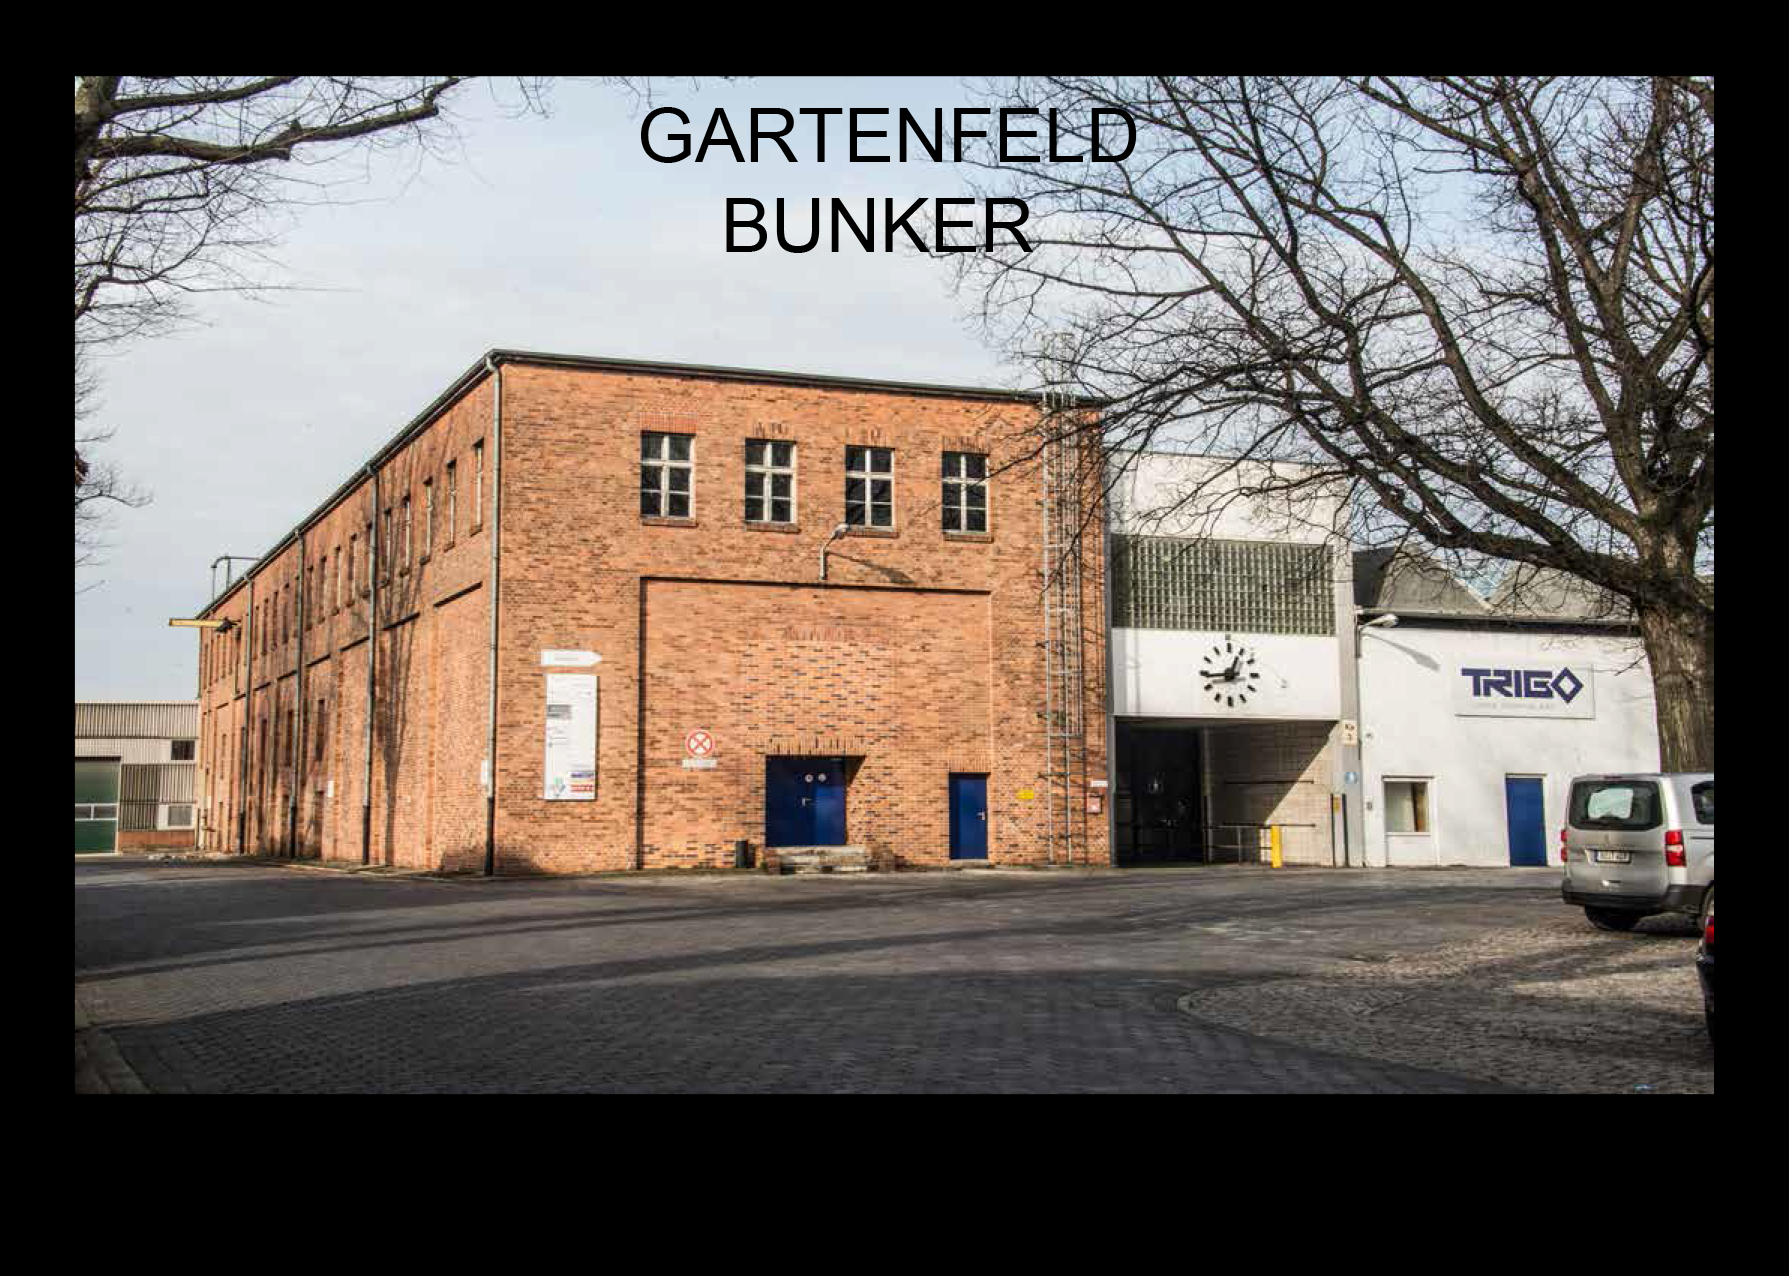 Gartenfeld Bunker